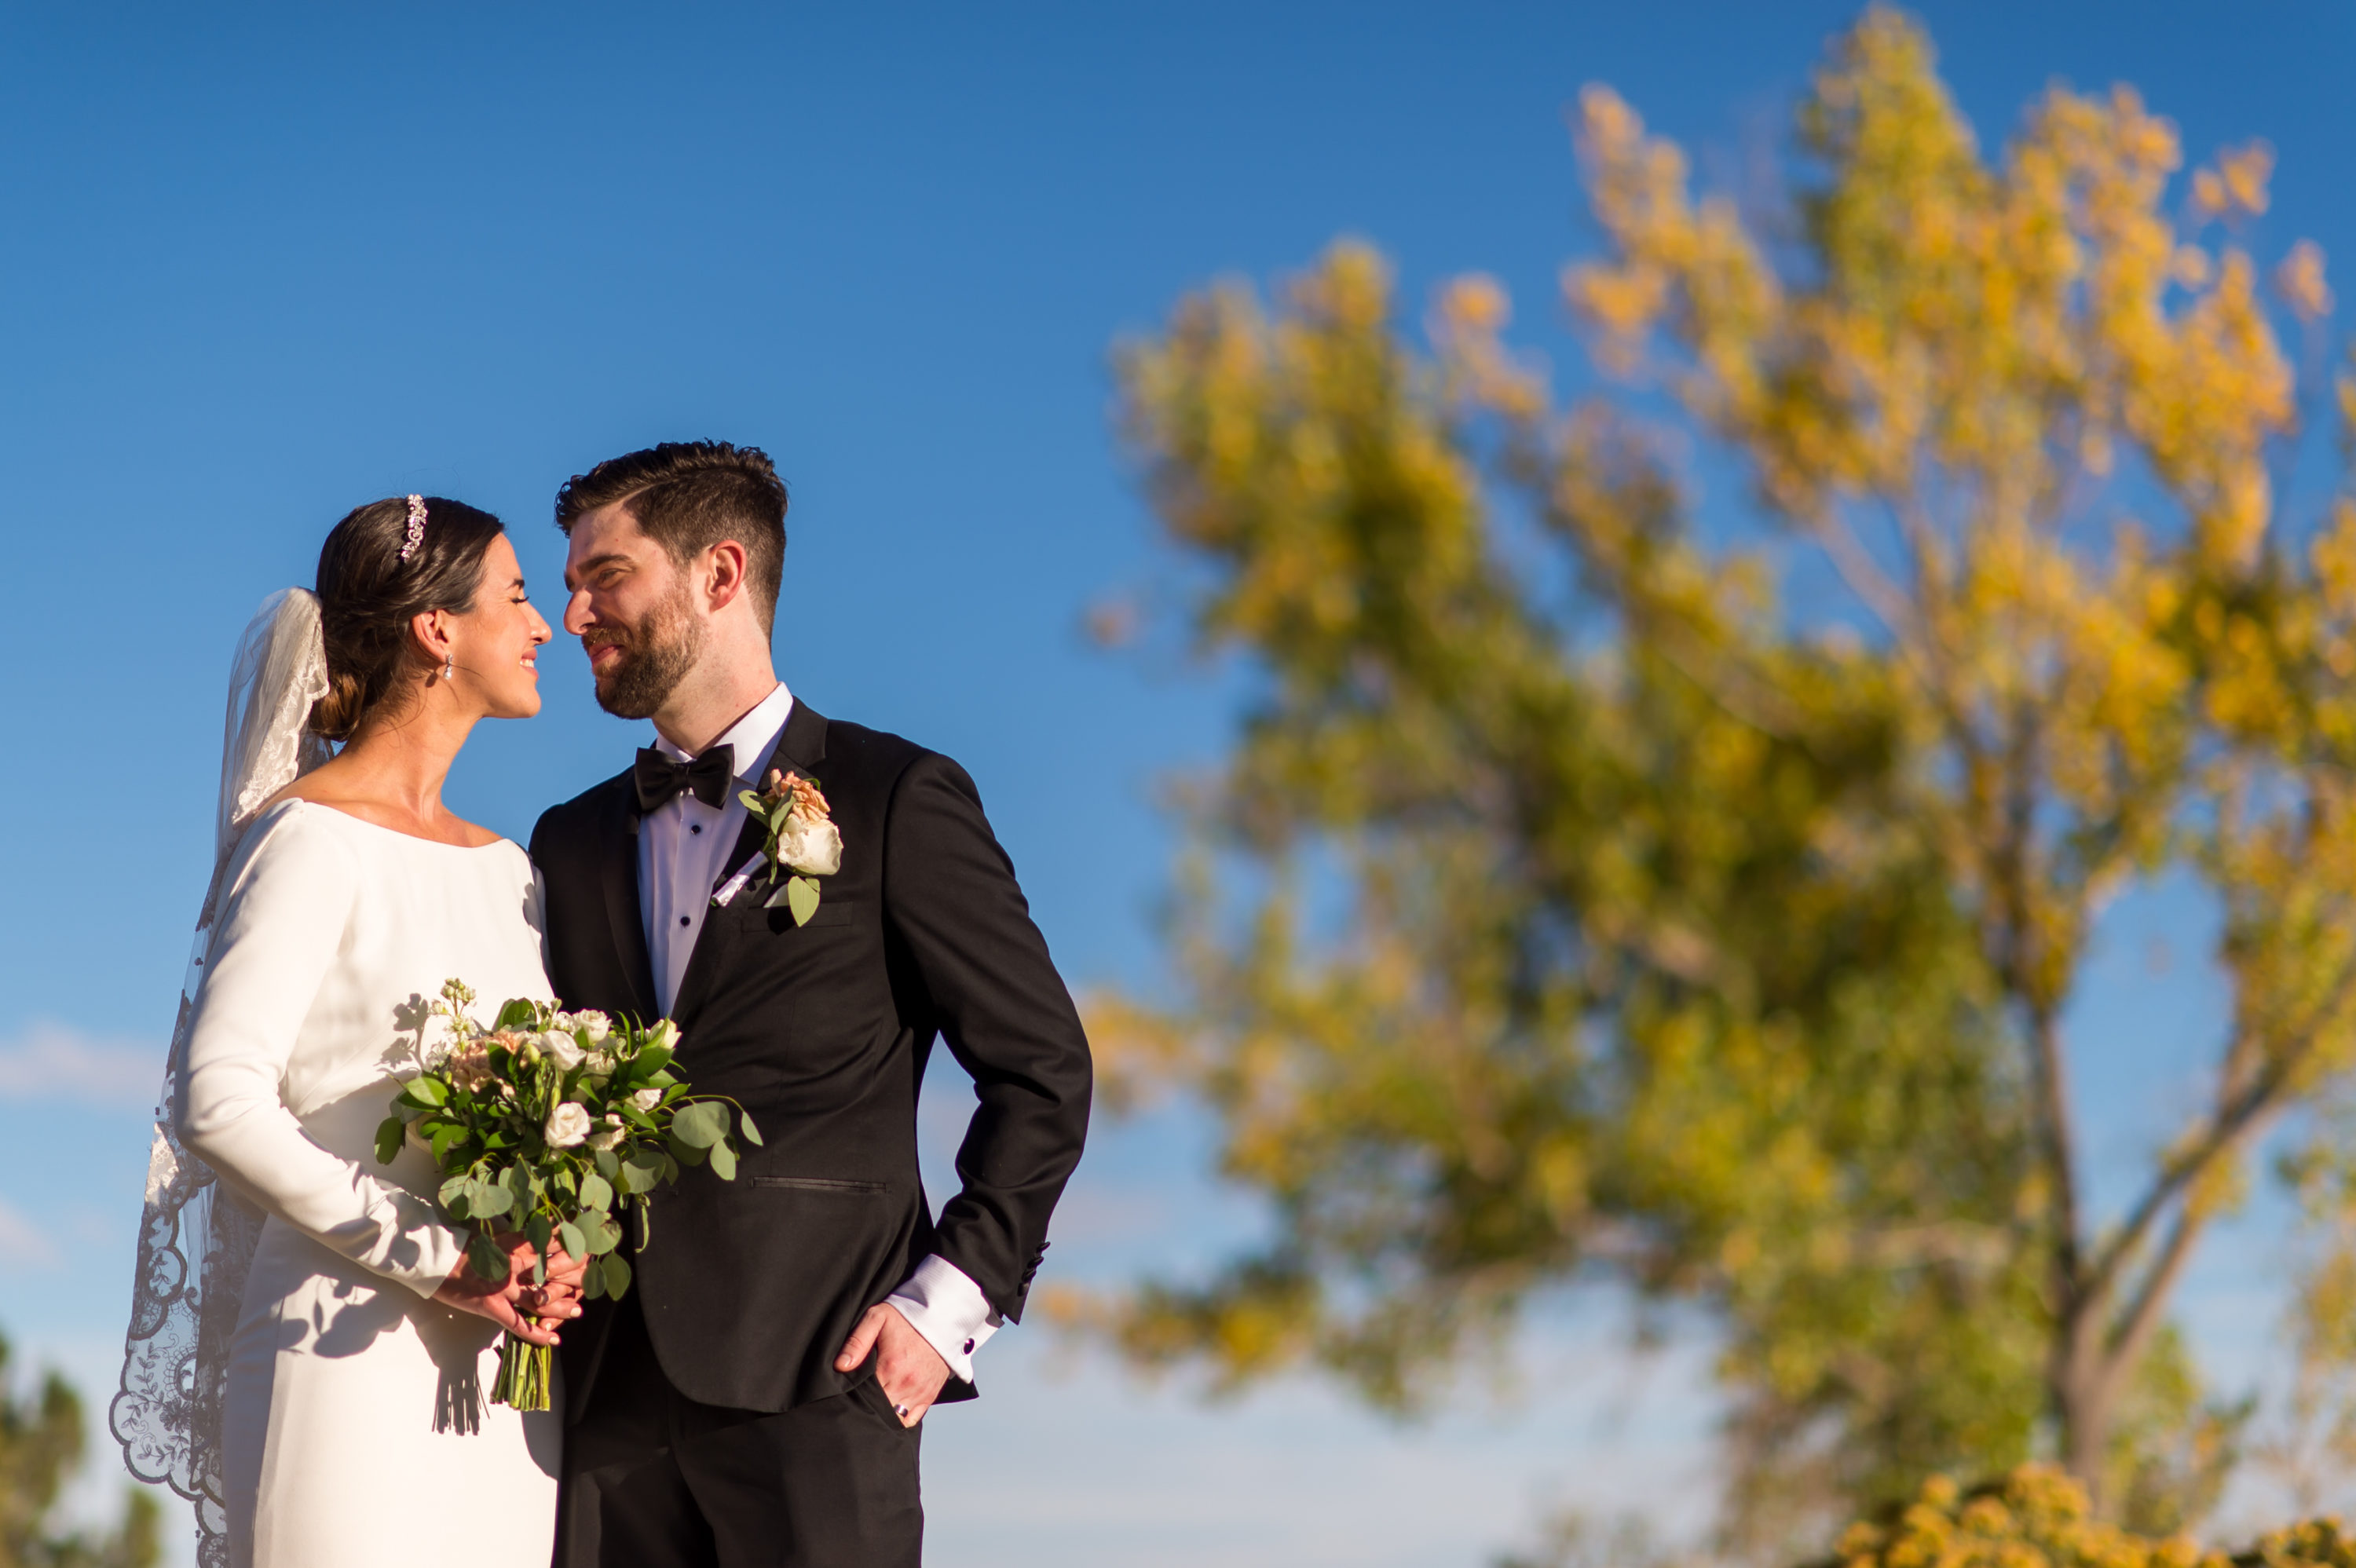 Bride and groom pose during wedding photo portraits at Belmar Park in Lakewood, Colorado.